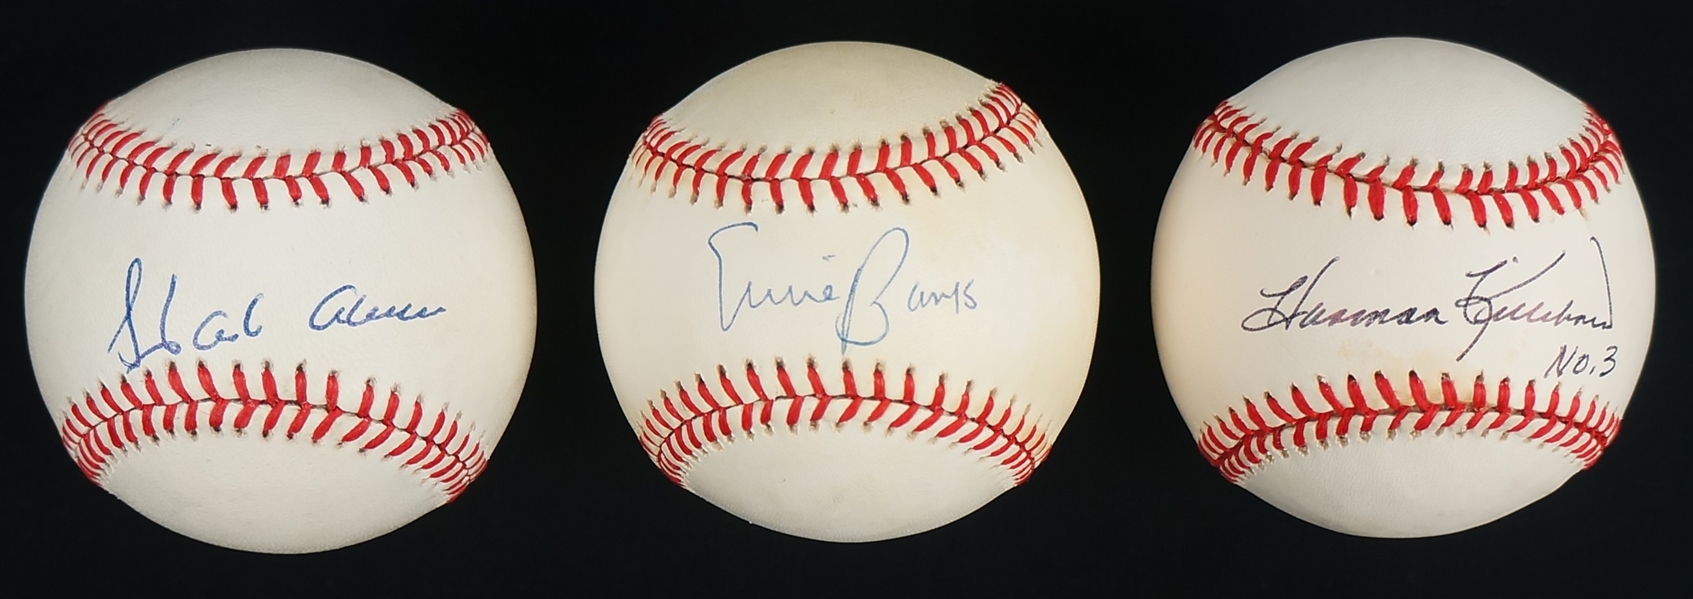 Ernie Banks Hank Aaron & Harmon Killebrew Autographed Baseballs 